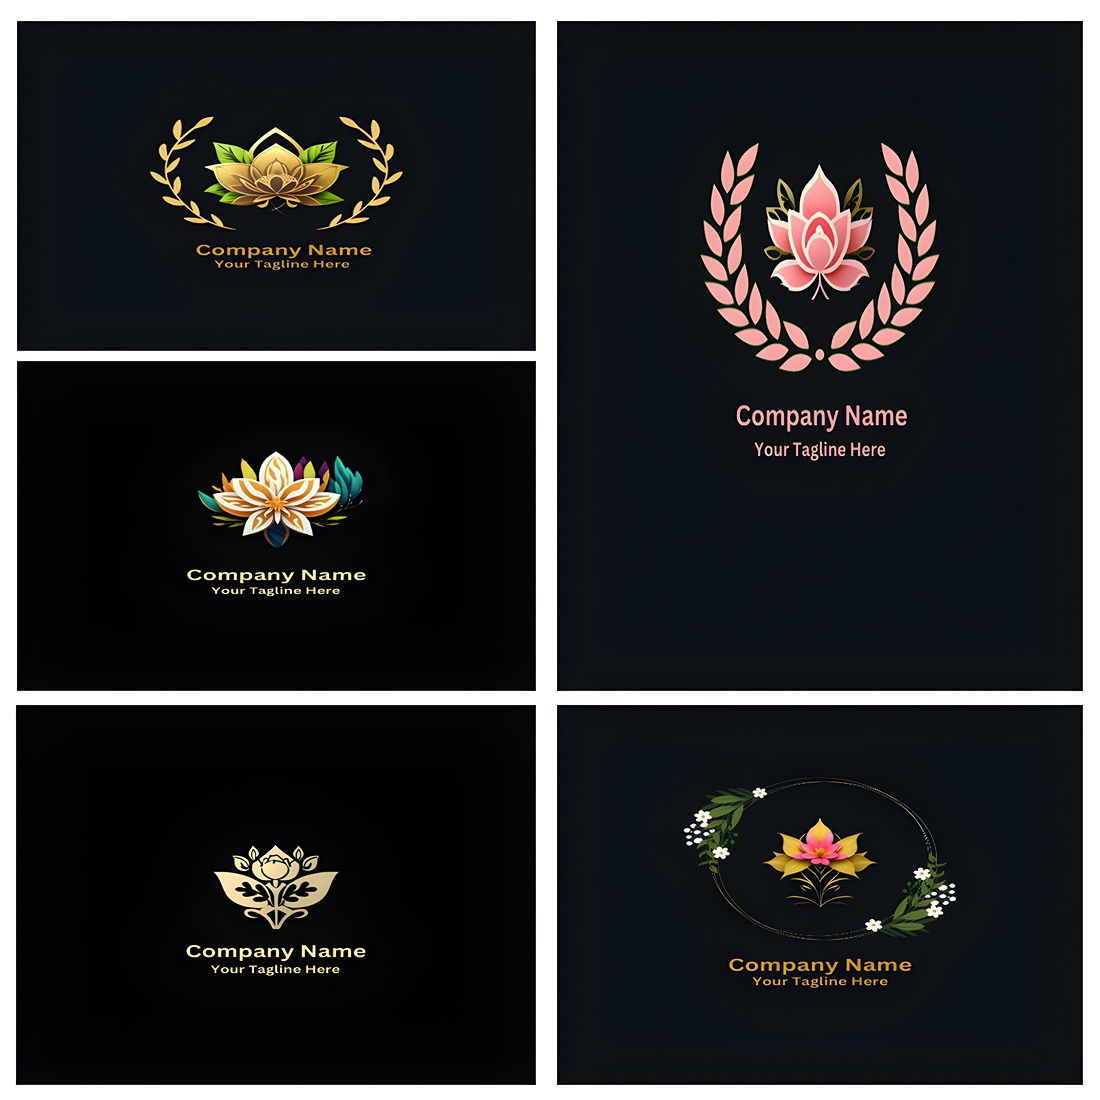 Flower - Luxury Logo Design Template cover image.